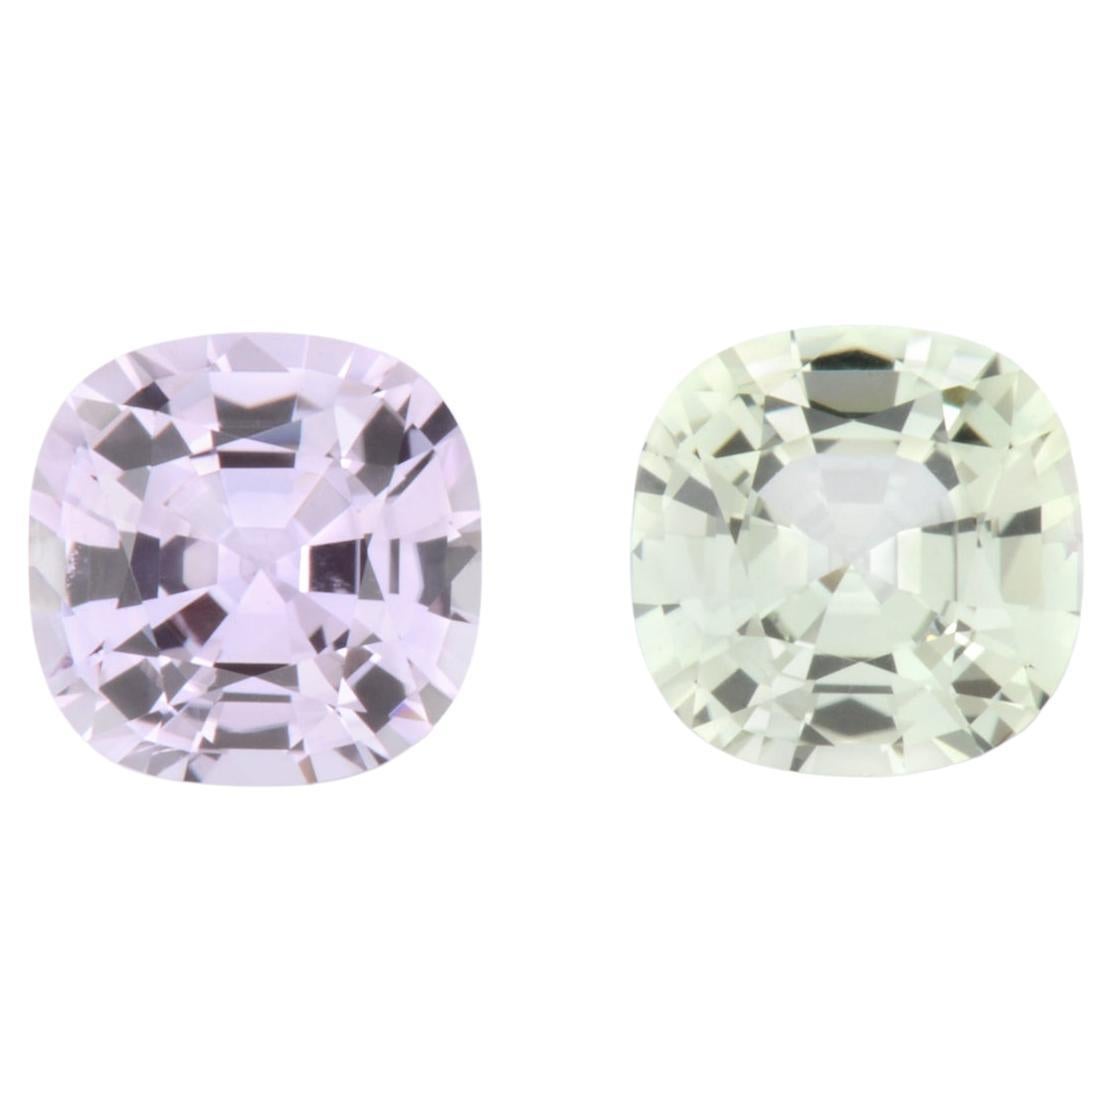 Unheated Fancy Sapphire Ring Earrings Cushion Pair 2.25 Carat Loose Gemstones